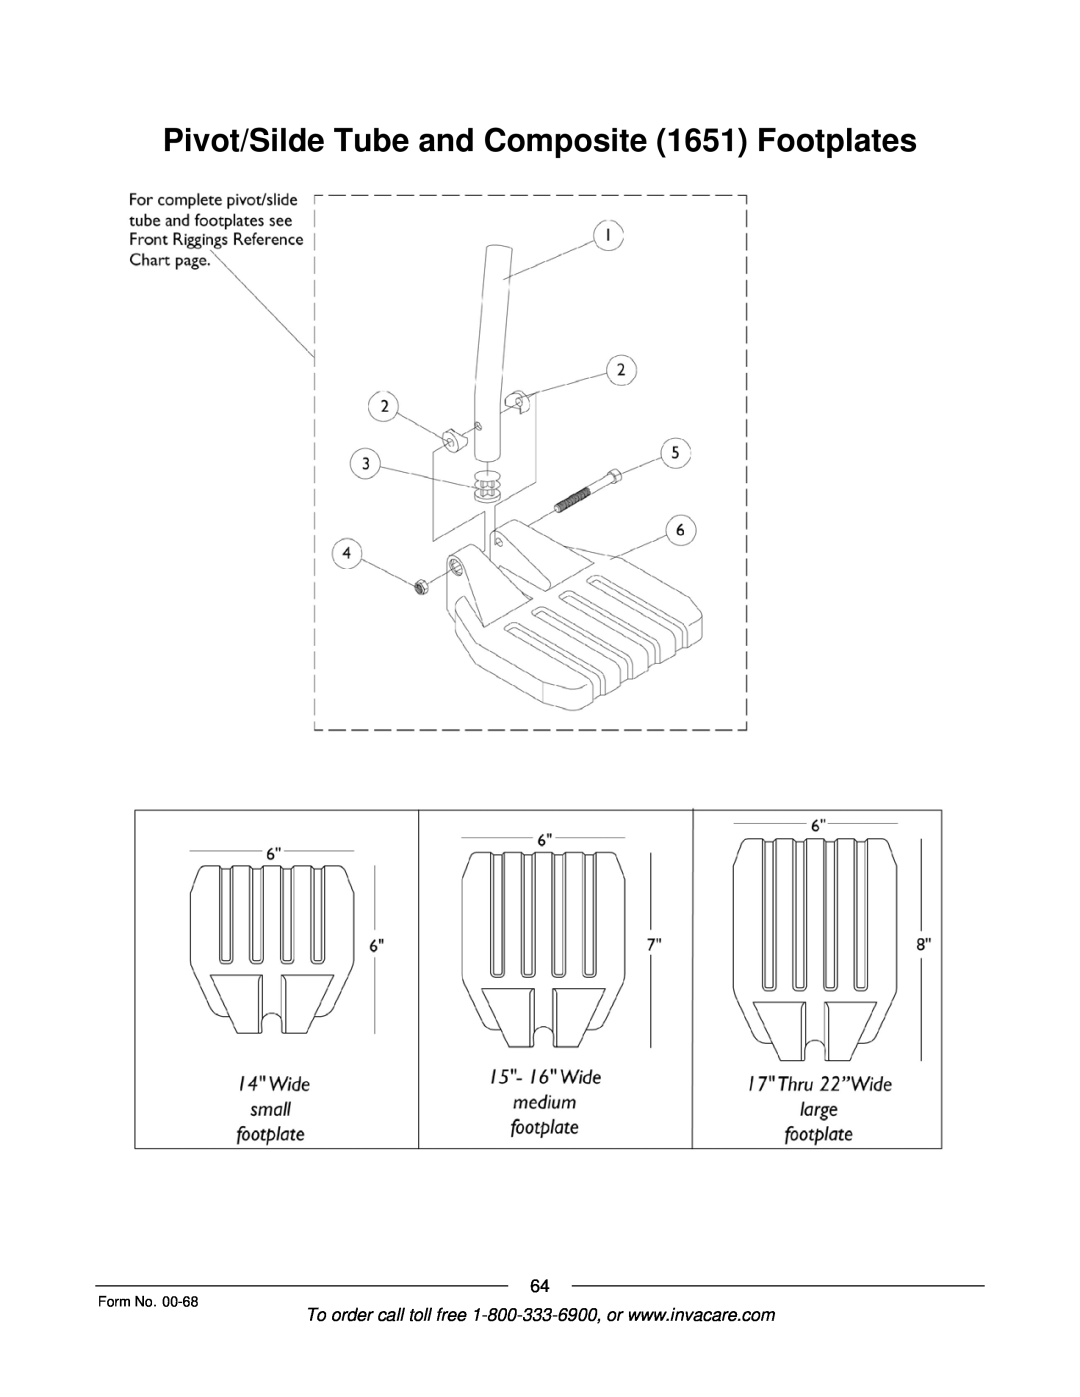 Invacare R2TM manual Pivot/Silde Tube and Composite 1651 Footplates, Form No 